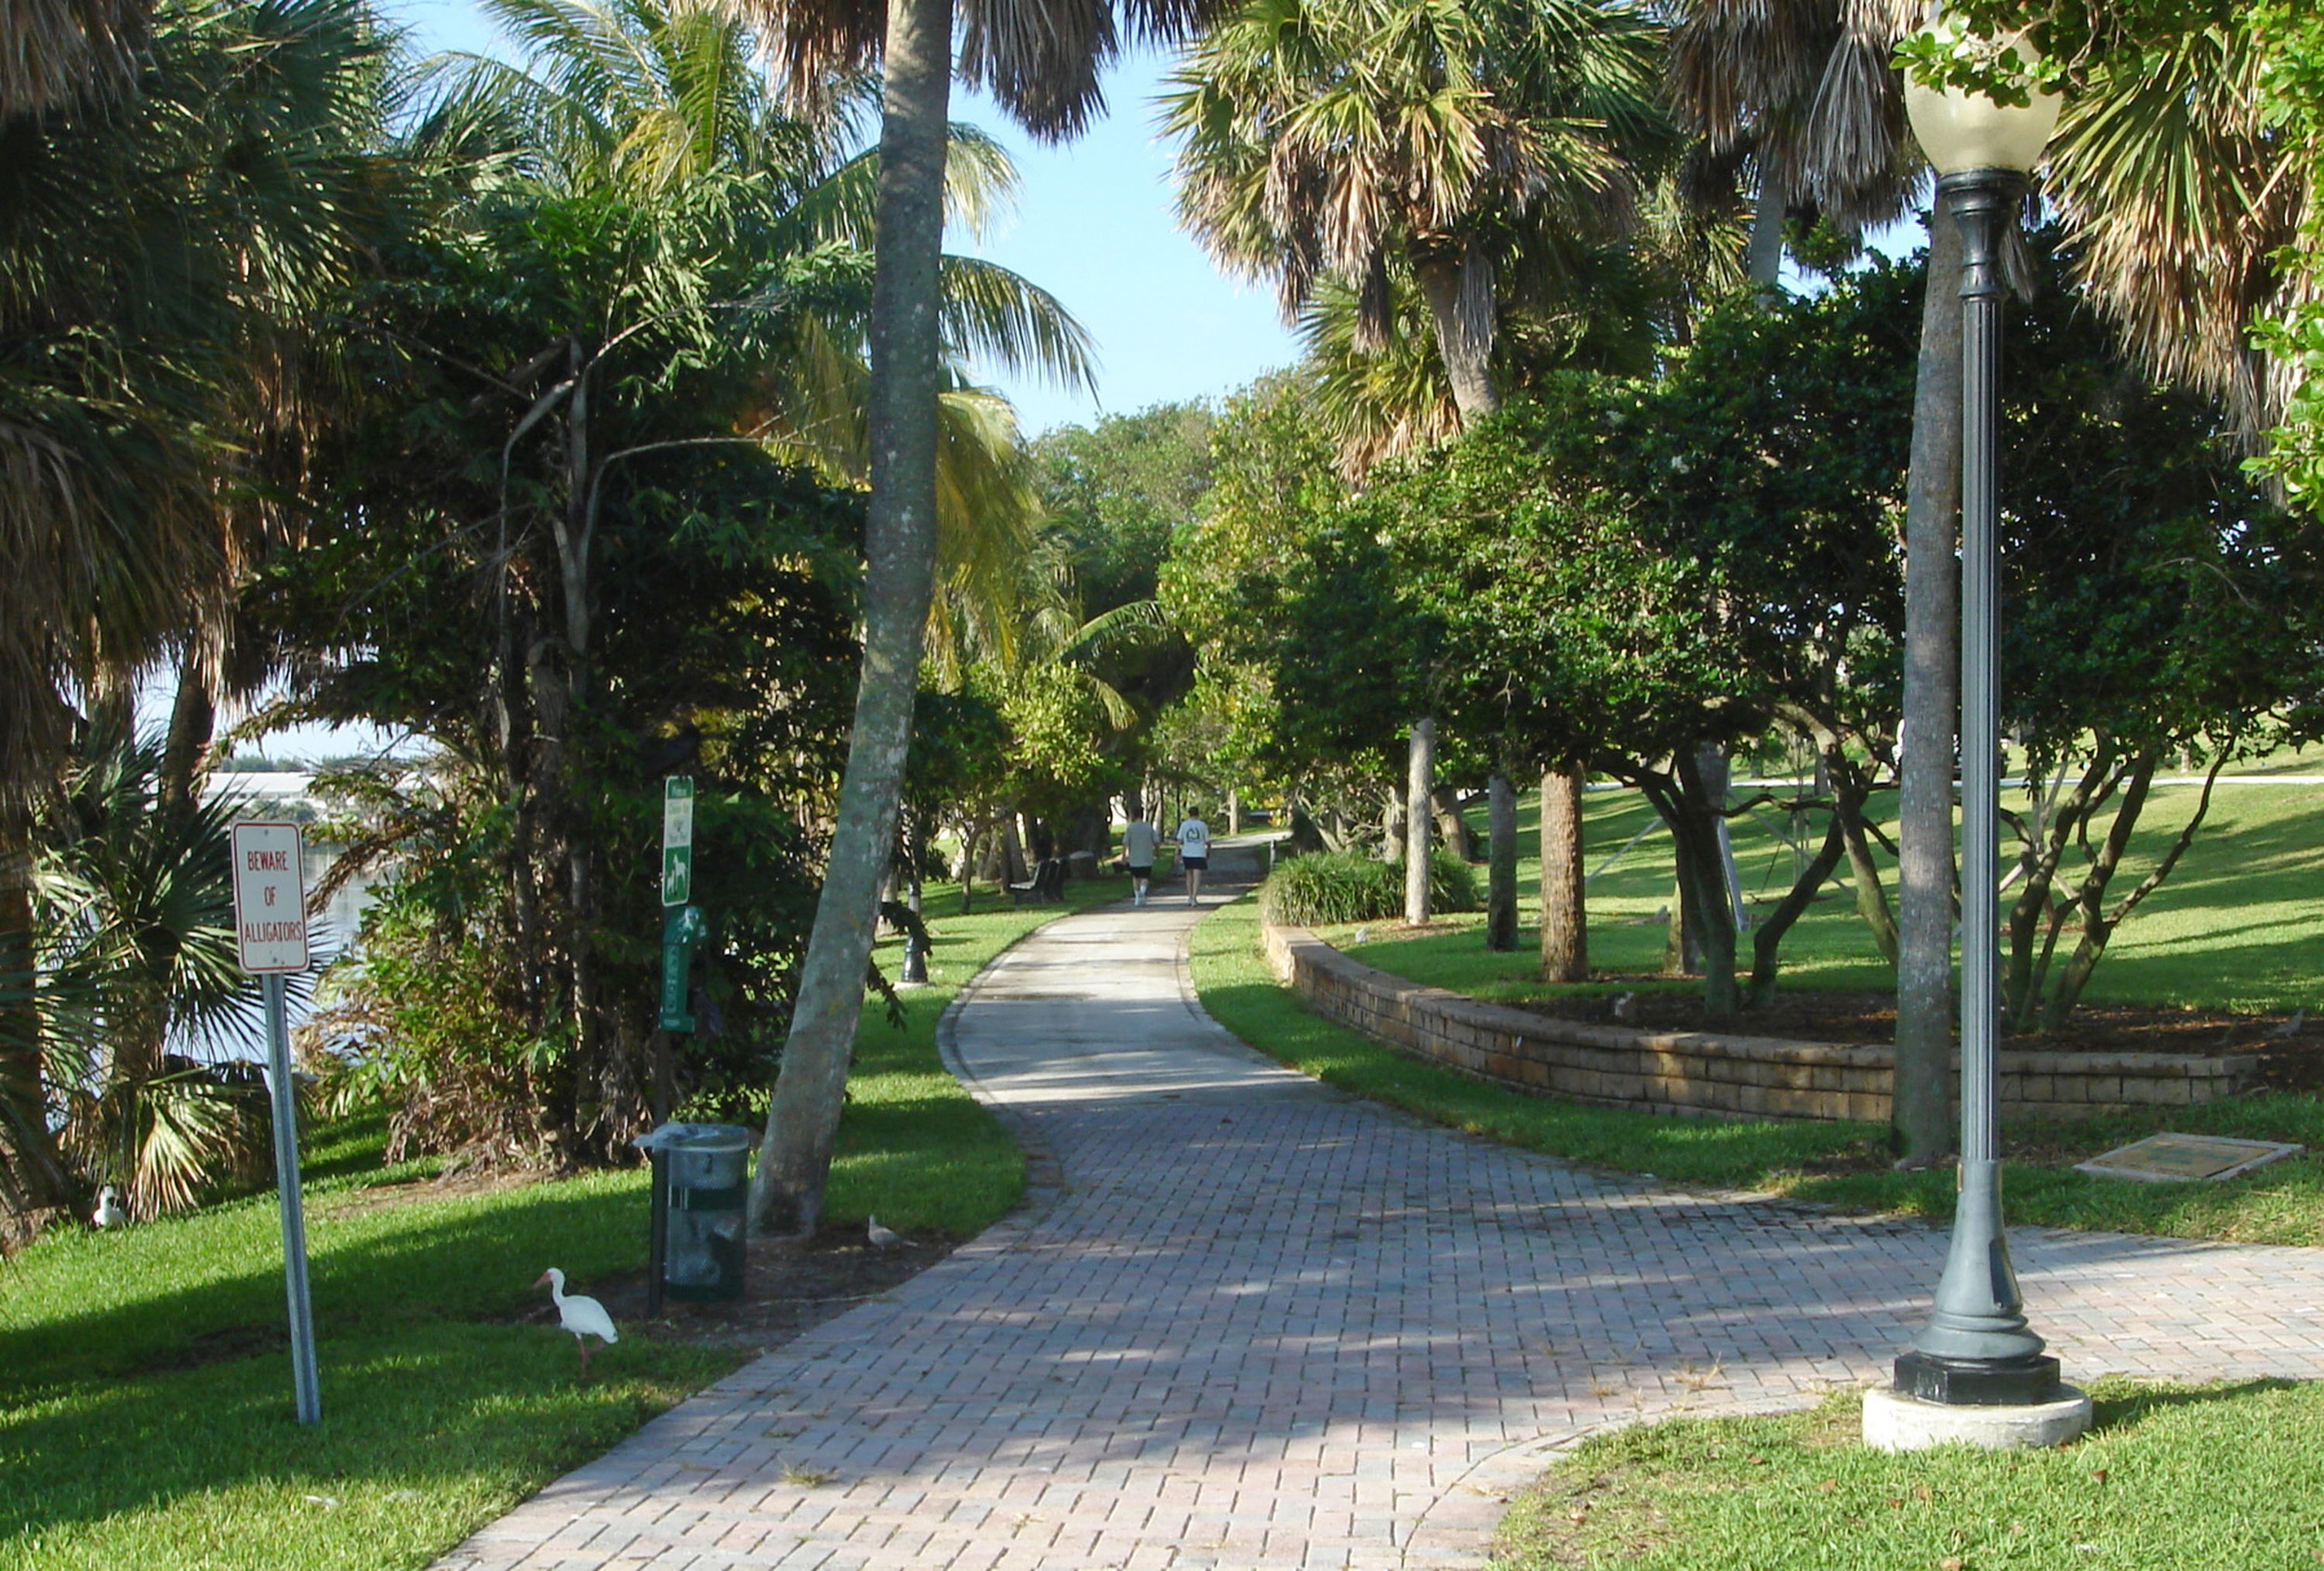 Pelican Lake Park Juno Beach Florida Paver Walking Path.jpg